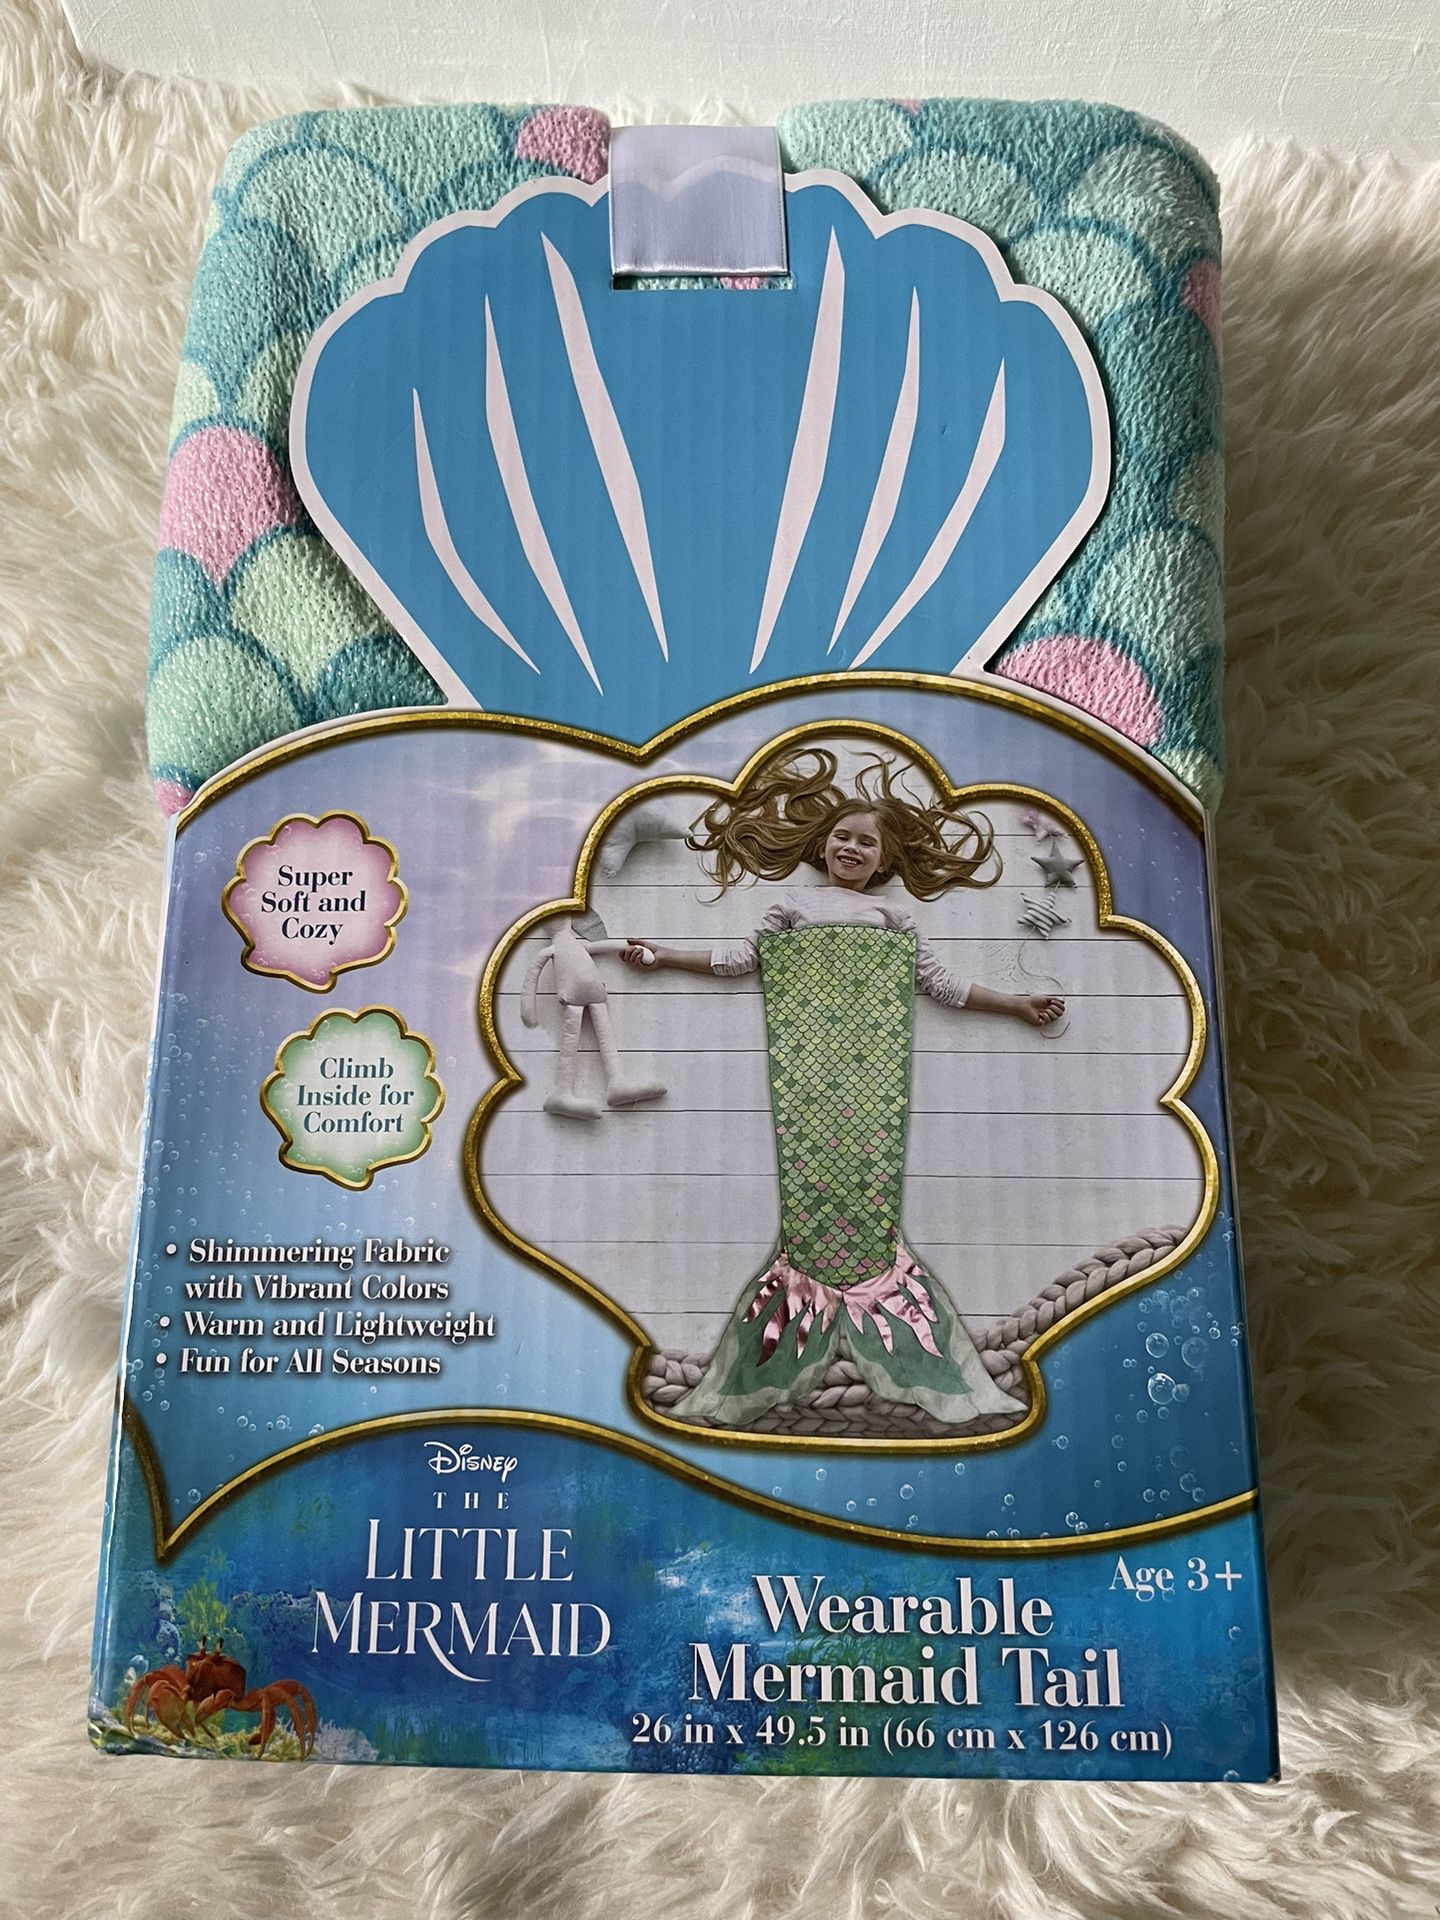 Disney The Little Mermaid - Wearable Mermaid Tail - New in Box!